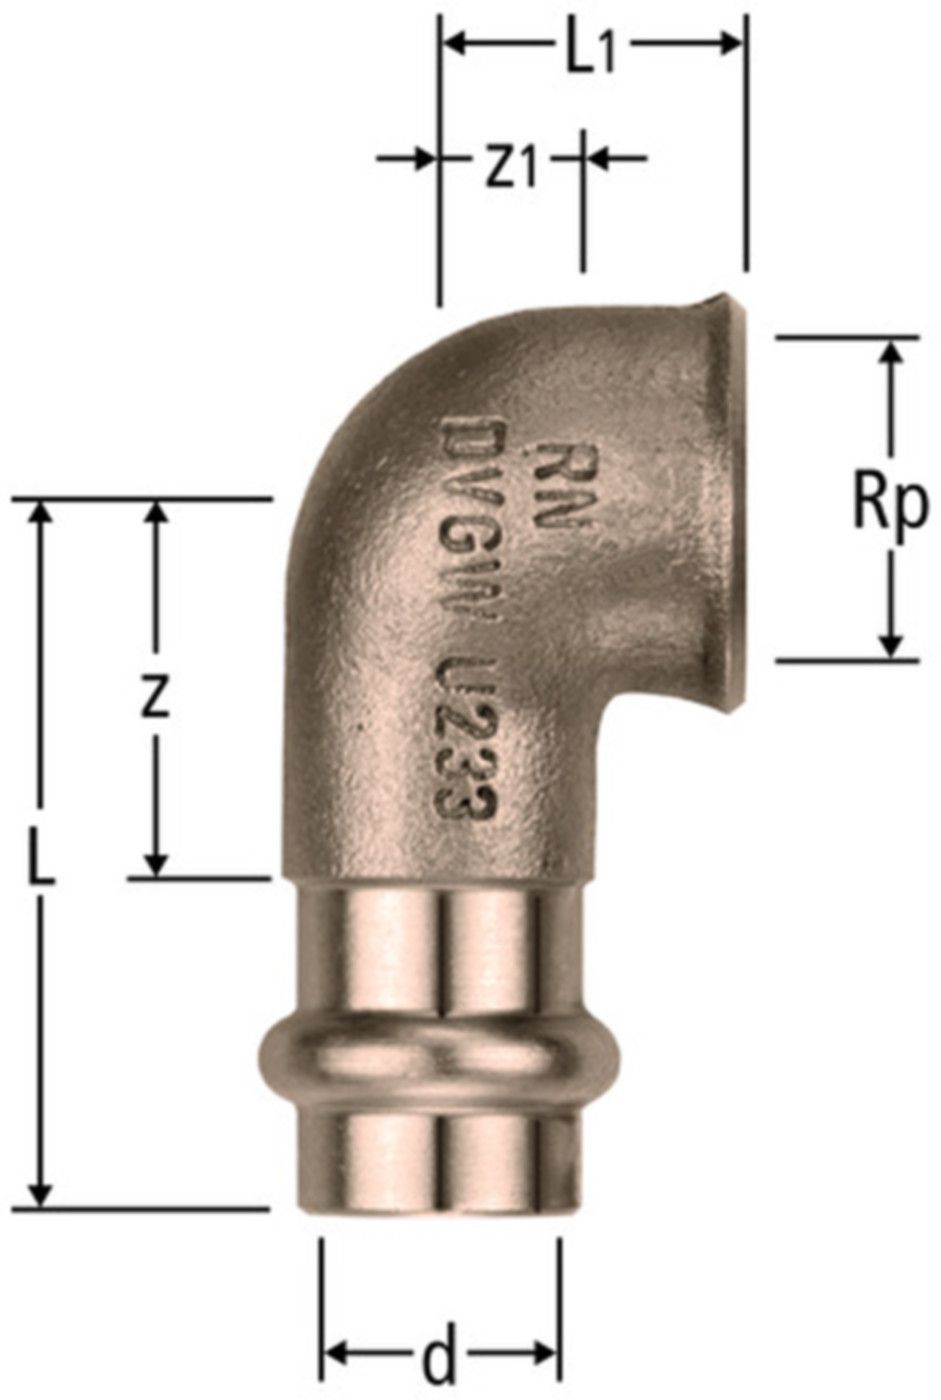 Winkel mit IG 18 x 3/4" 81006.26 - Nussbaum-Optipress-Rotguss-Fittings